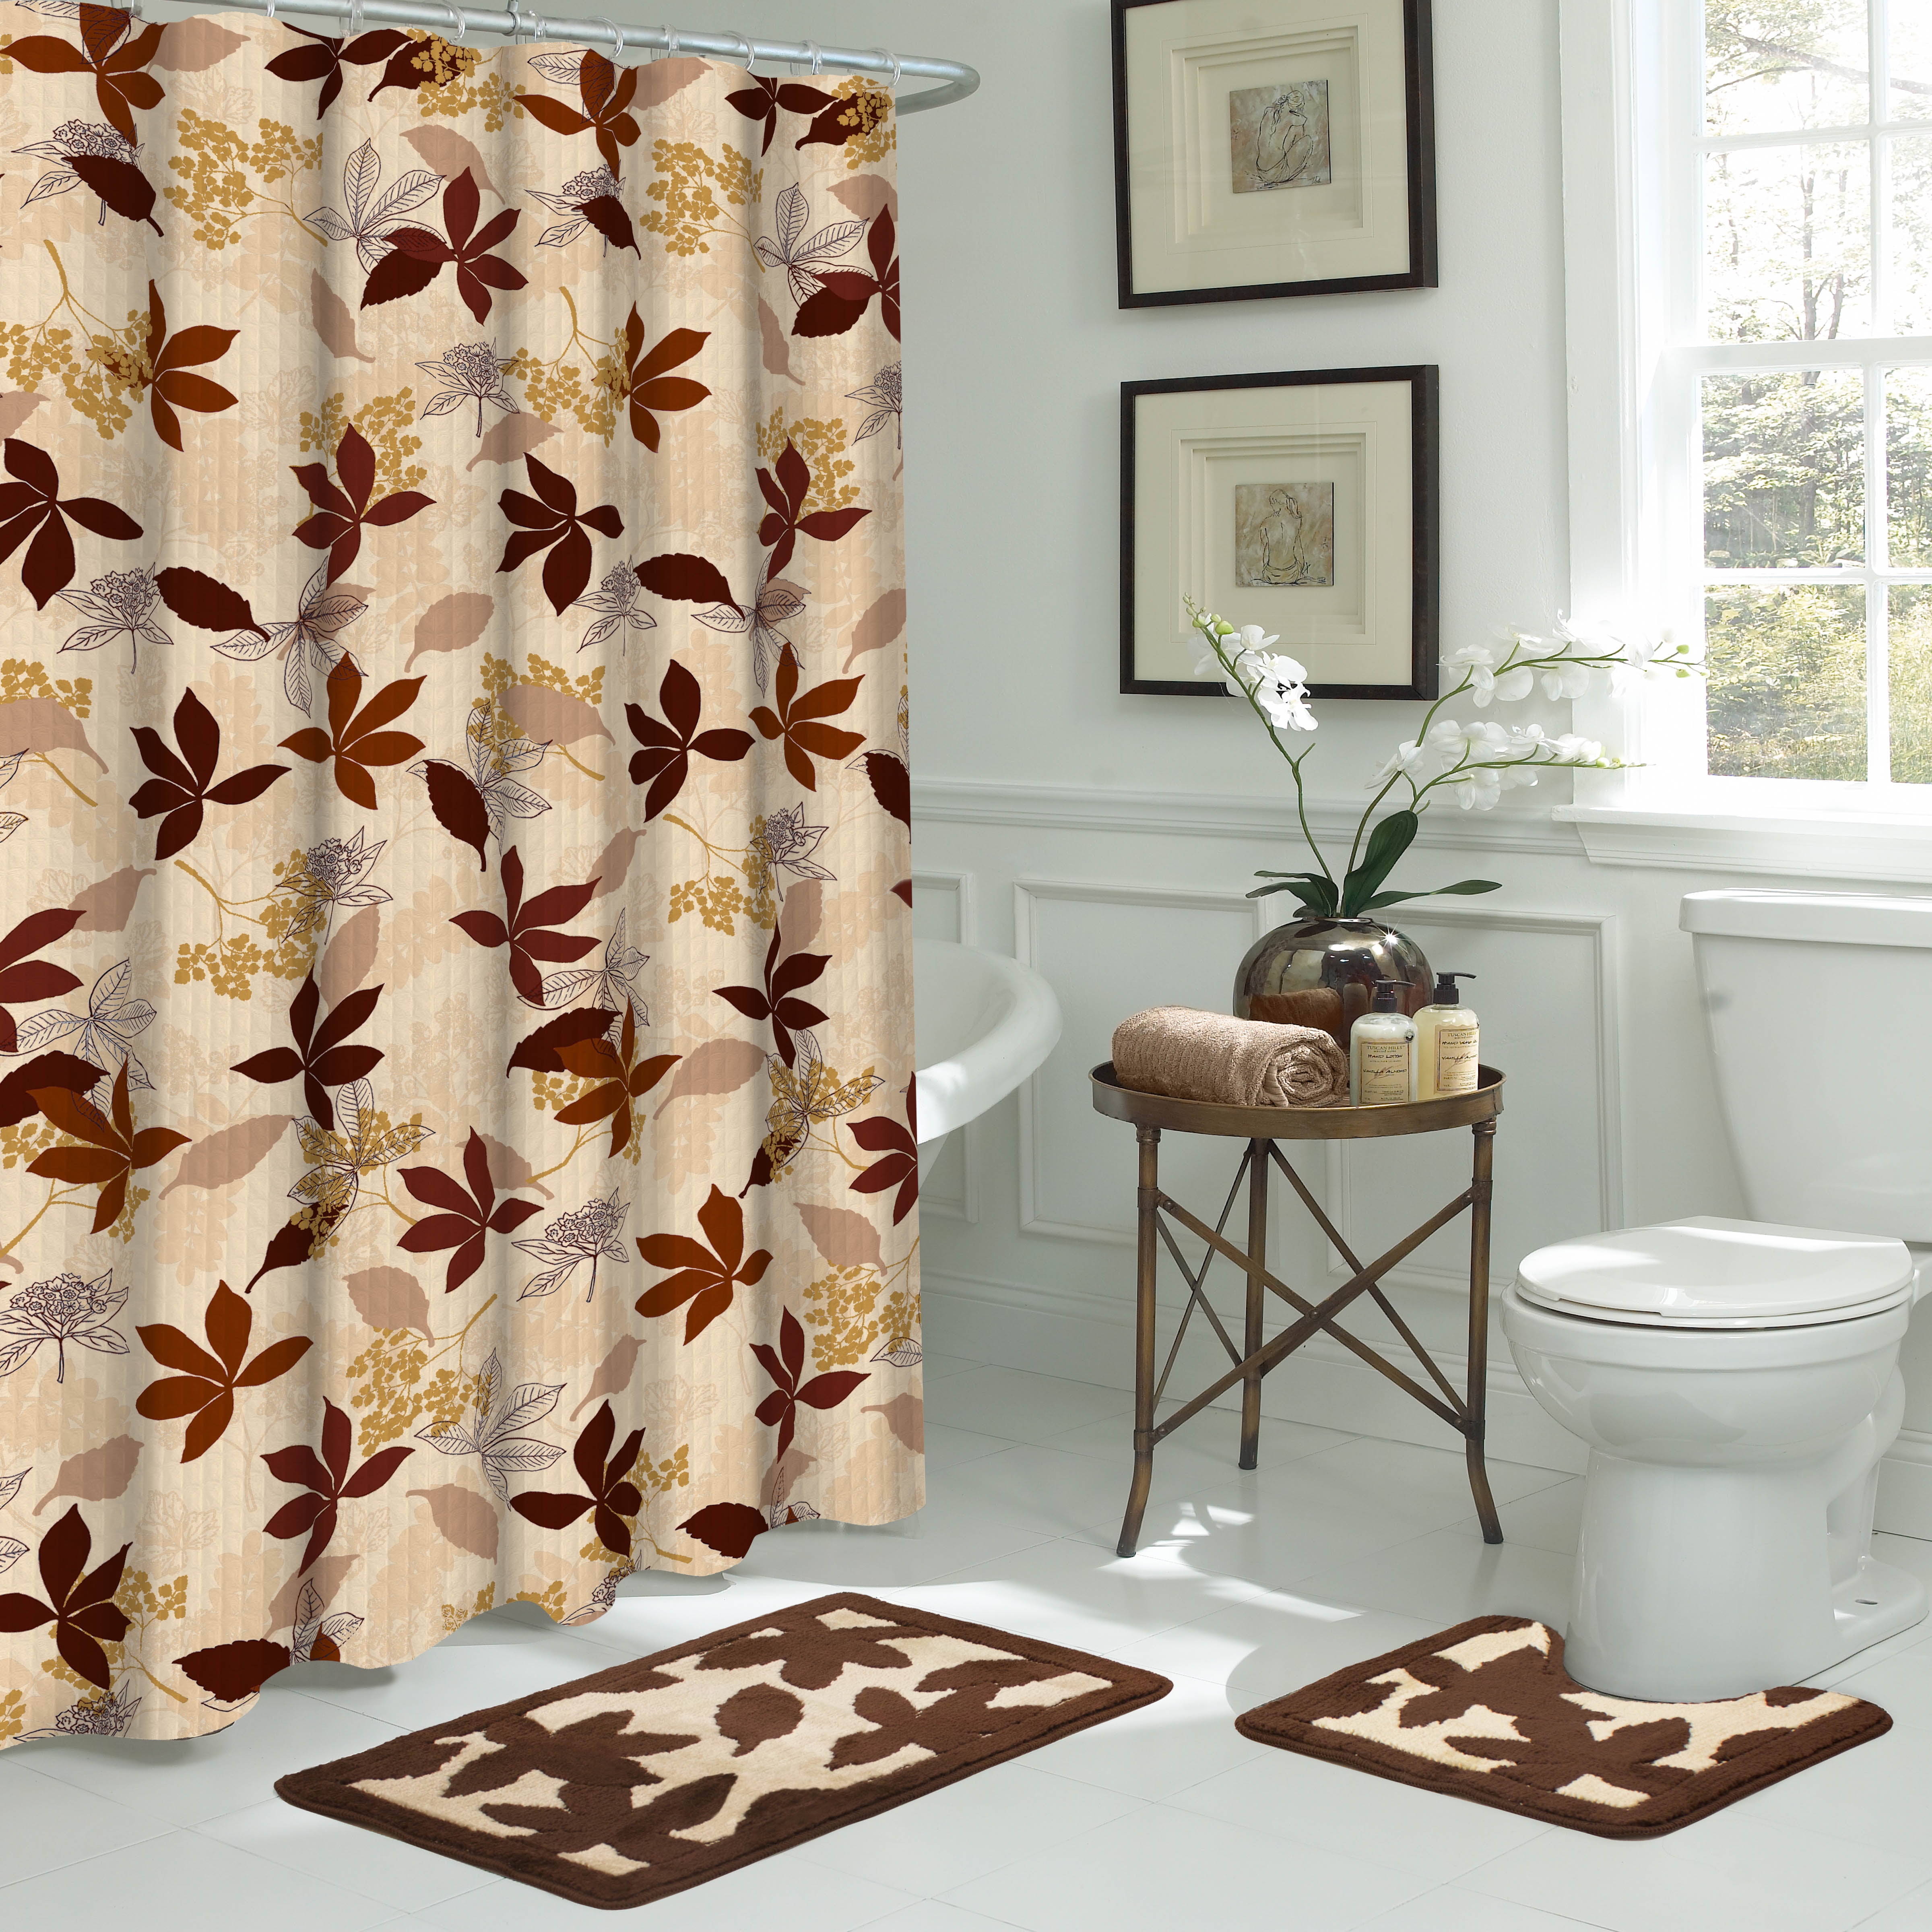 Paris Eiffel Tower Bathroom Waterproof Fabric Shower Curtain &12 Hooks 71*71inch 